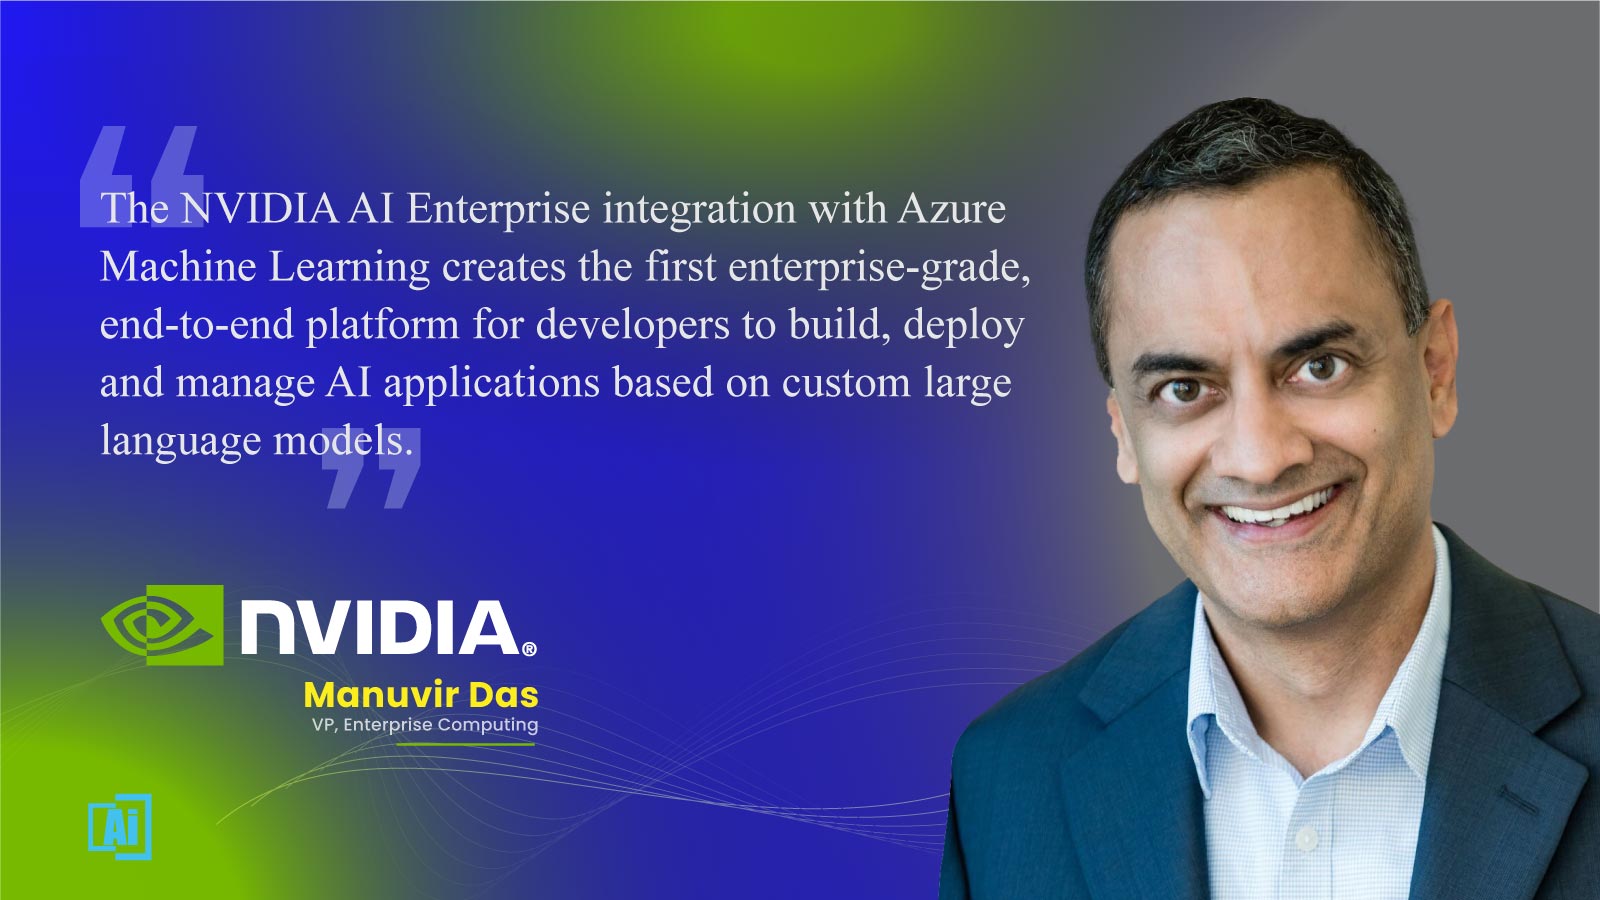 Manuvir Das, VP, Enterprise Computing at NVIDIA